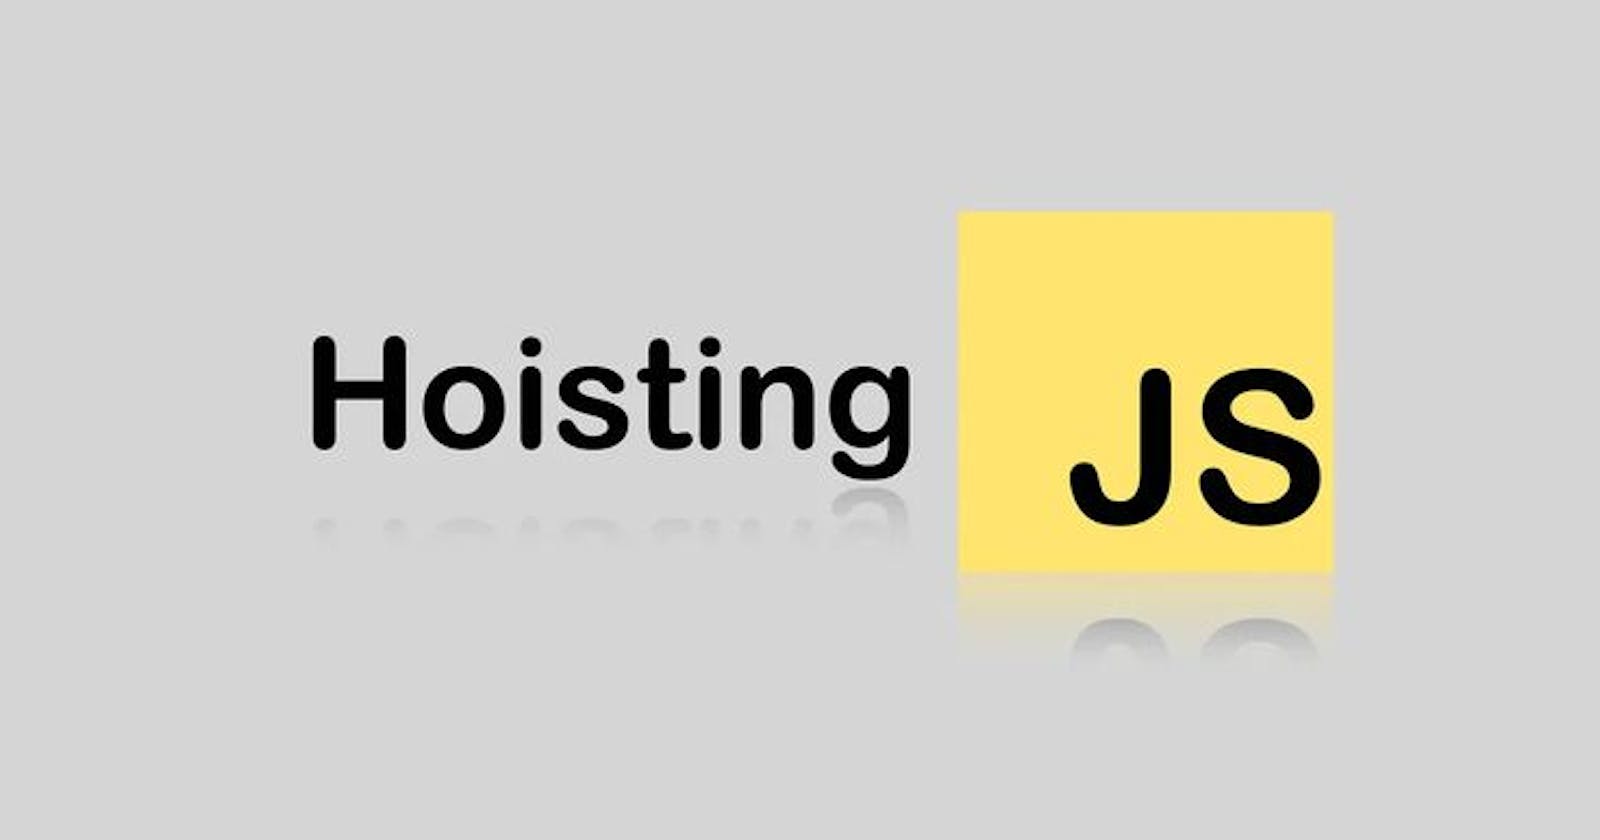 What is Hoisting: Javascript Under the Hood